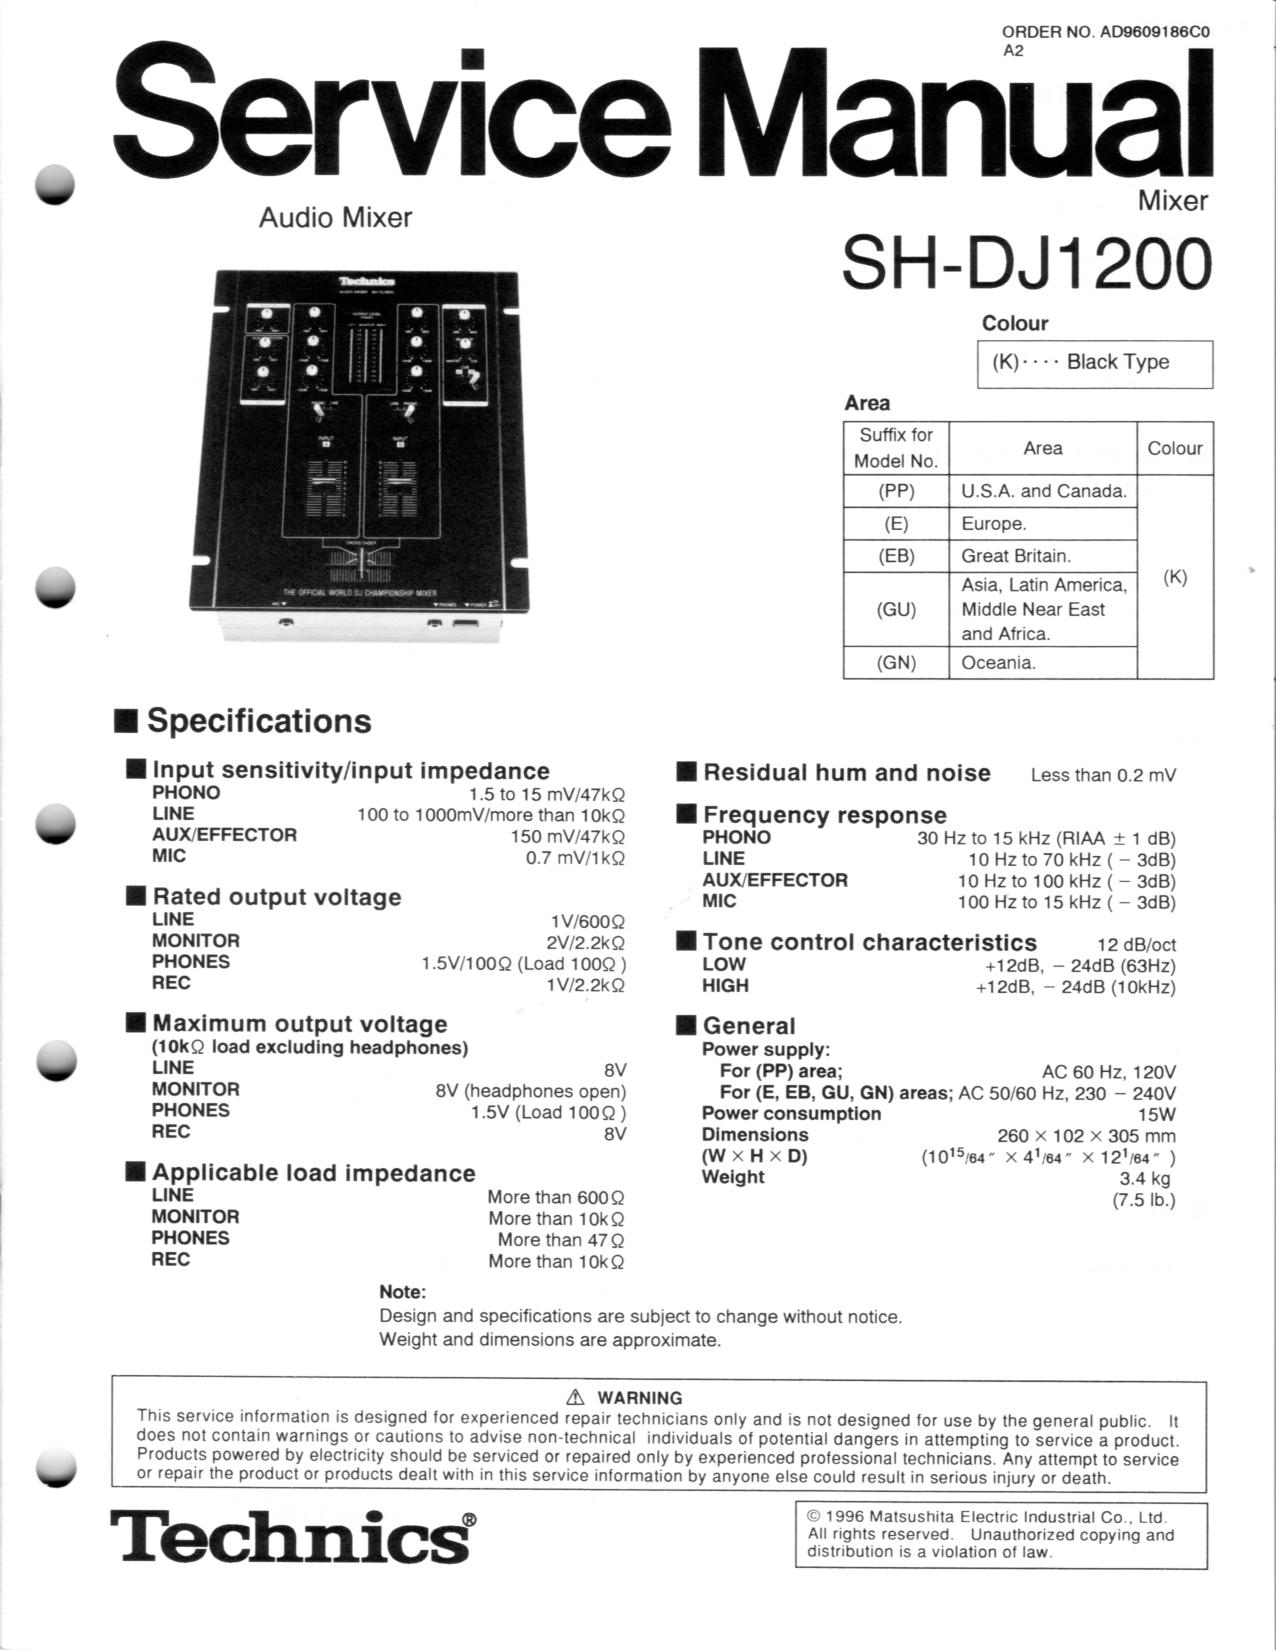 SH-DJ1200 service manual and diagrams